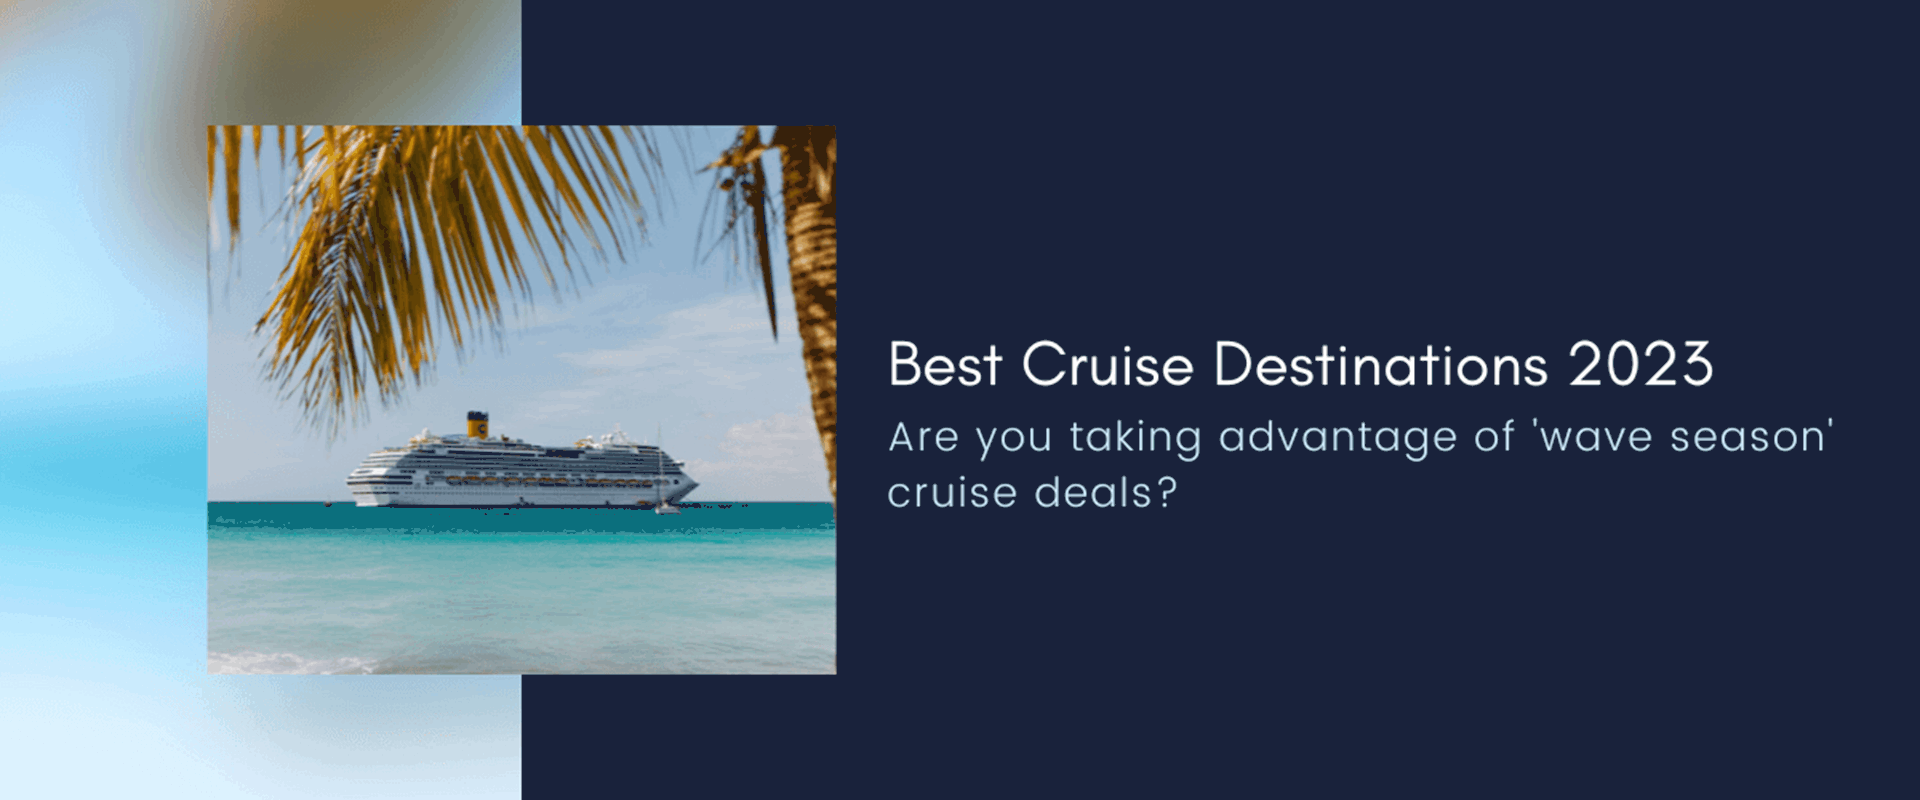 Best Cruise Destinations 2023